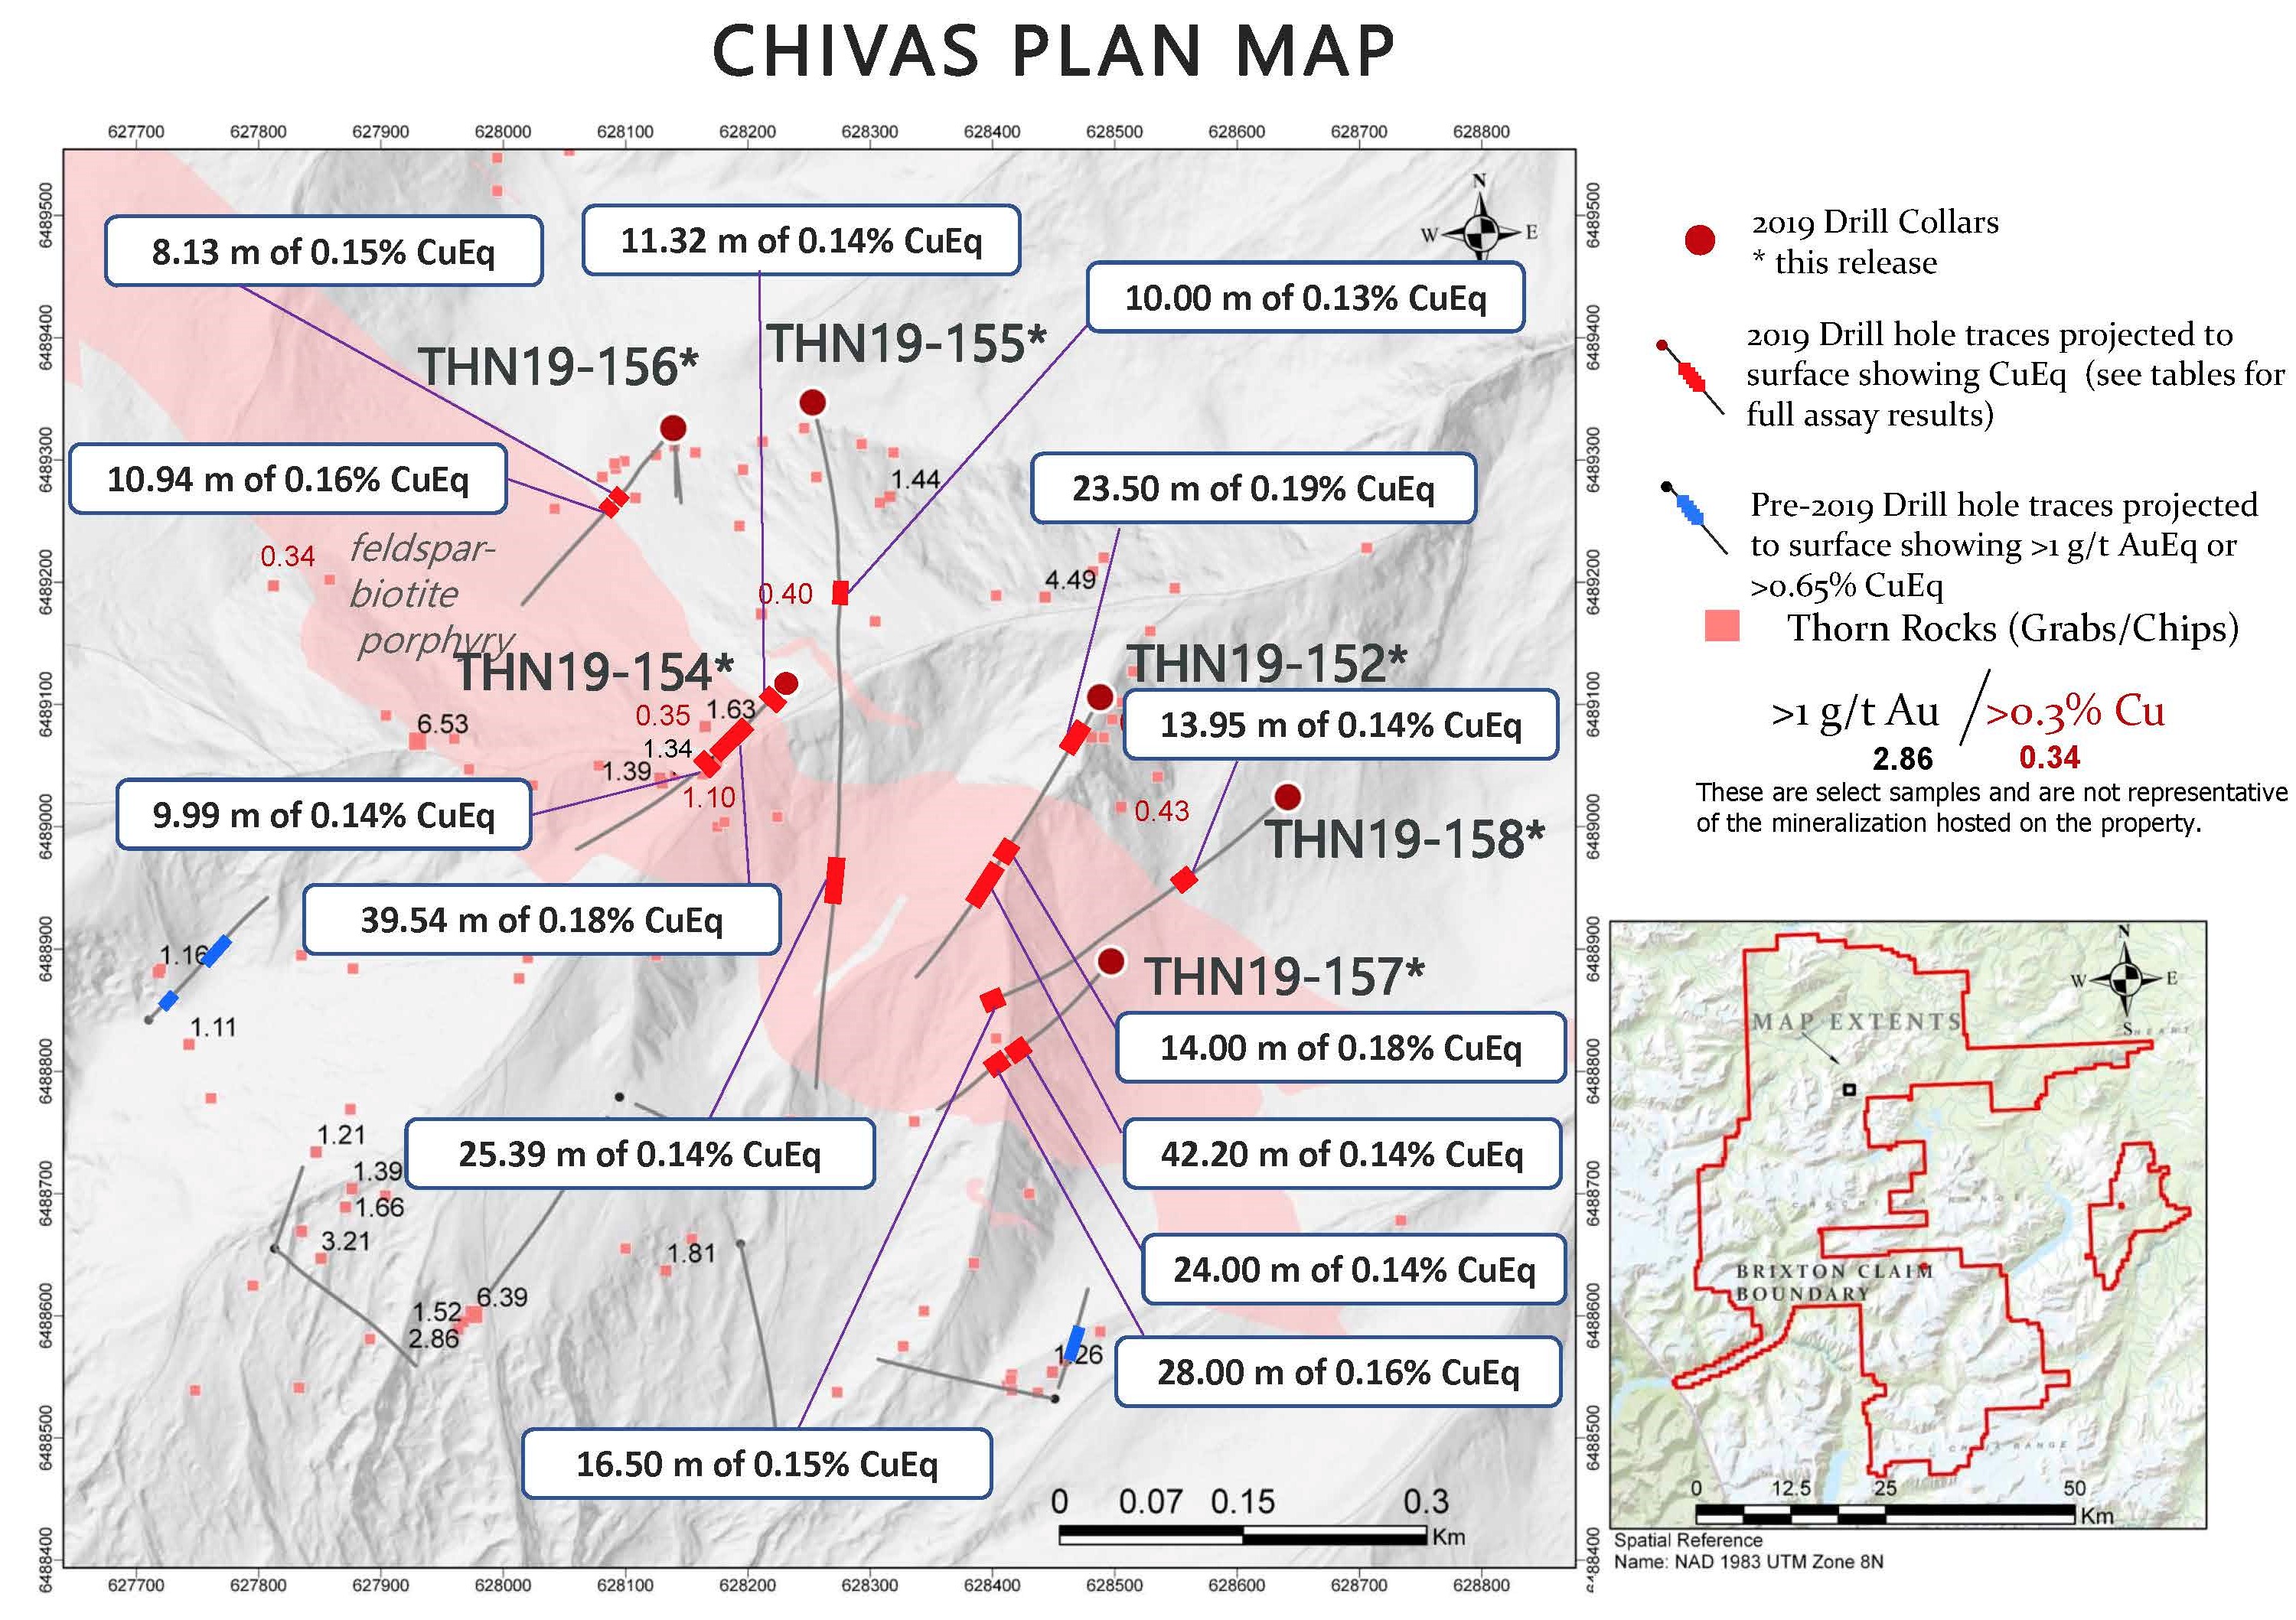 Figure 8 Chivas Plan Map